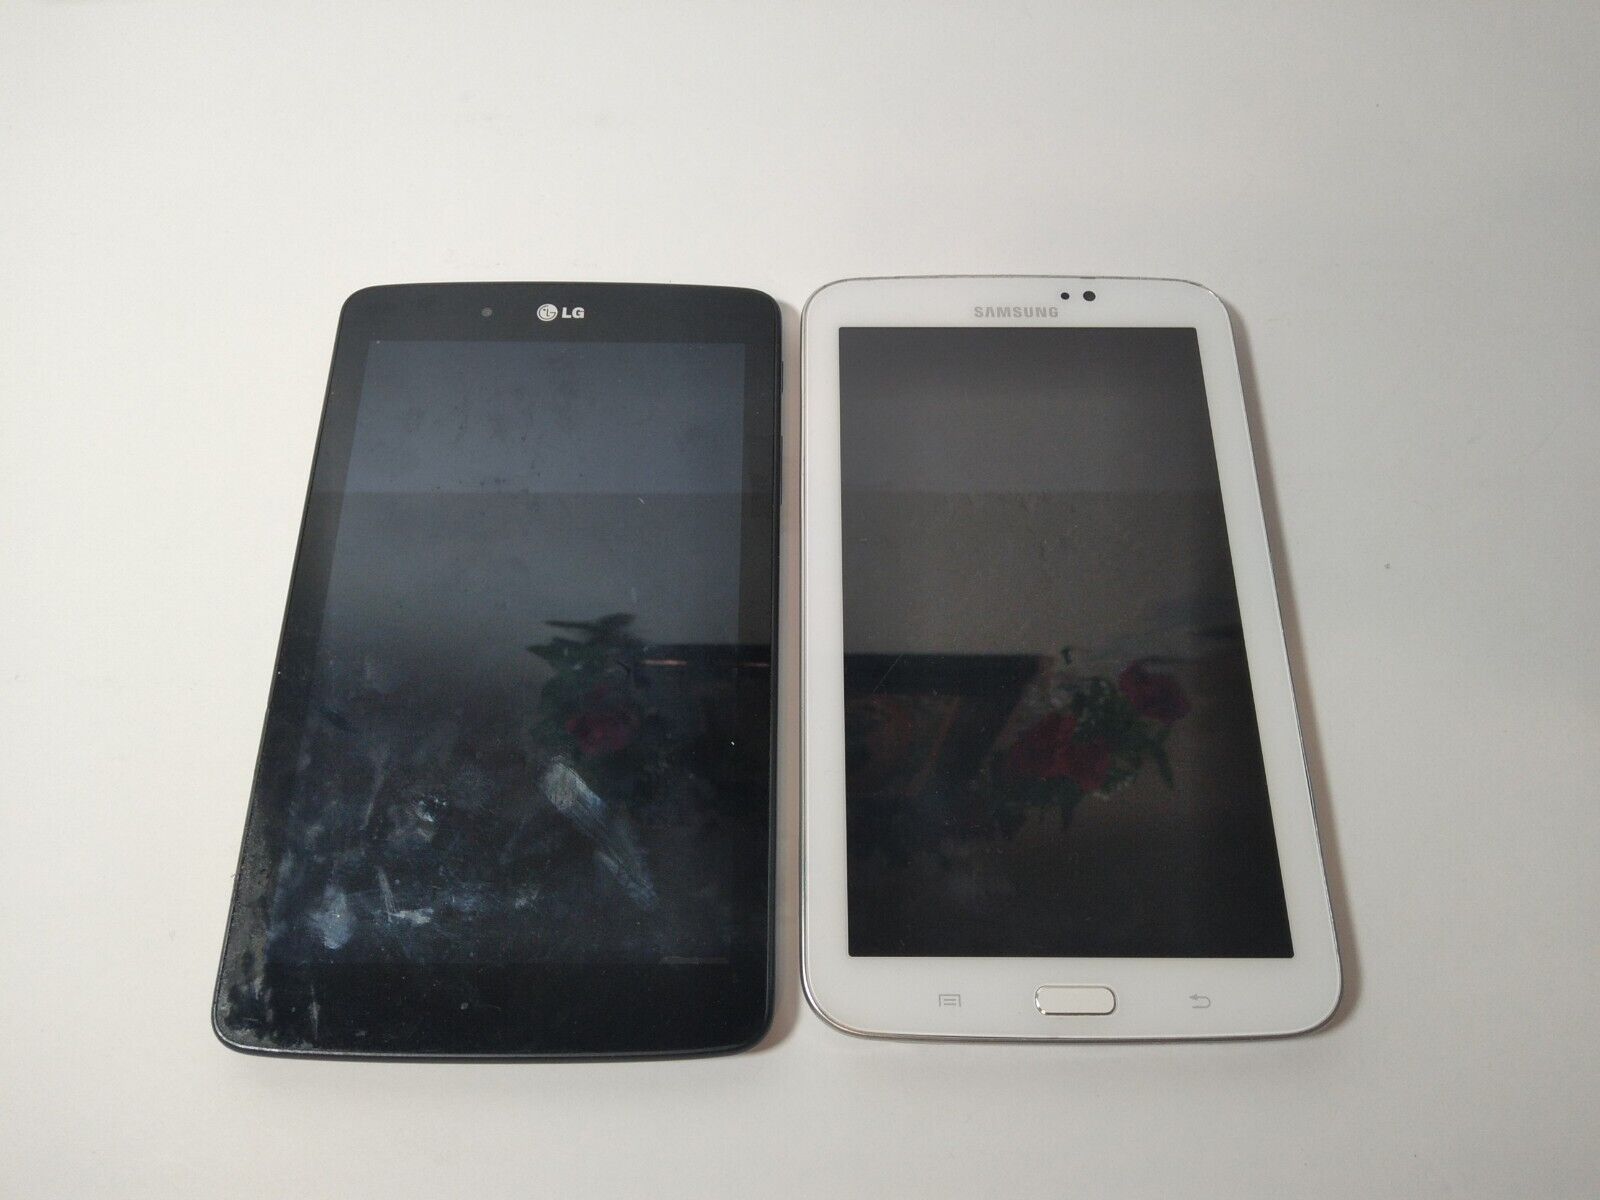 PARTS REPAIR Samsung Tablet ATT SM-T217S 16GB White 7in Black LG G Pad 7.0 V410